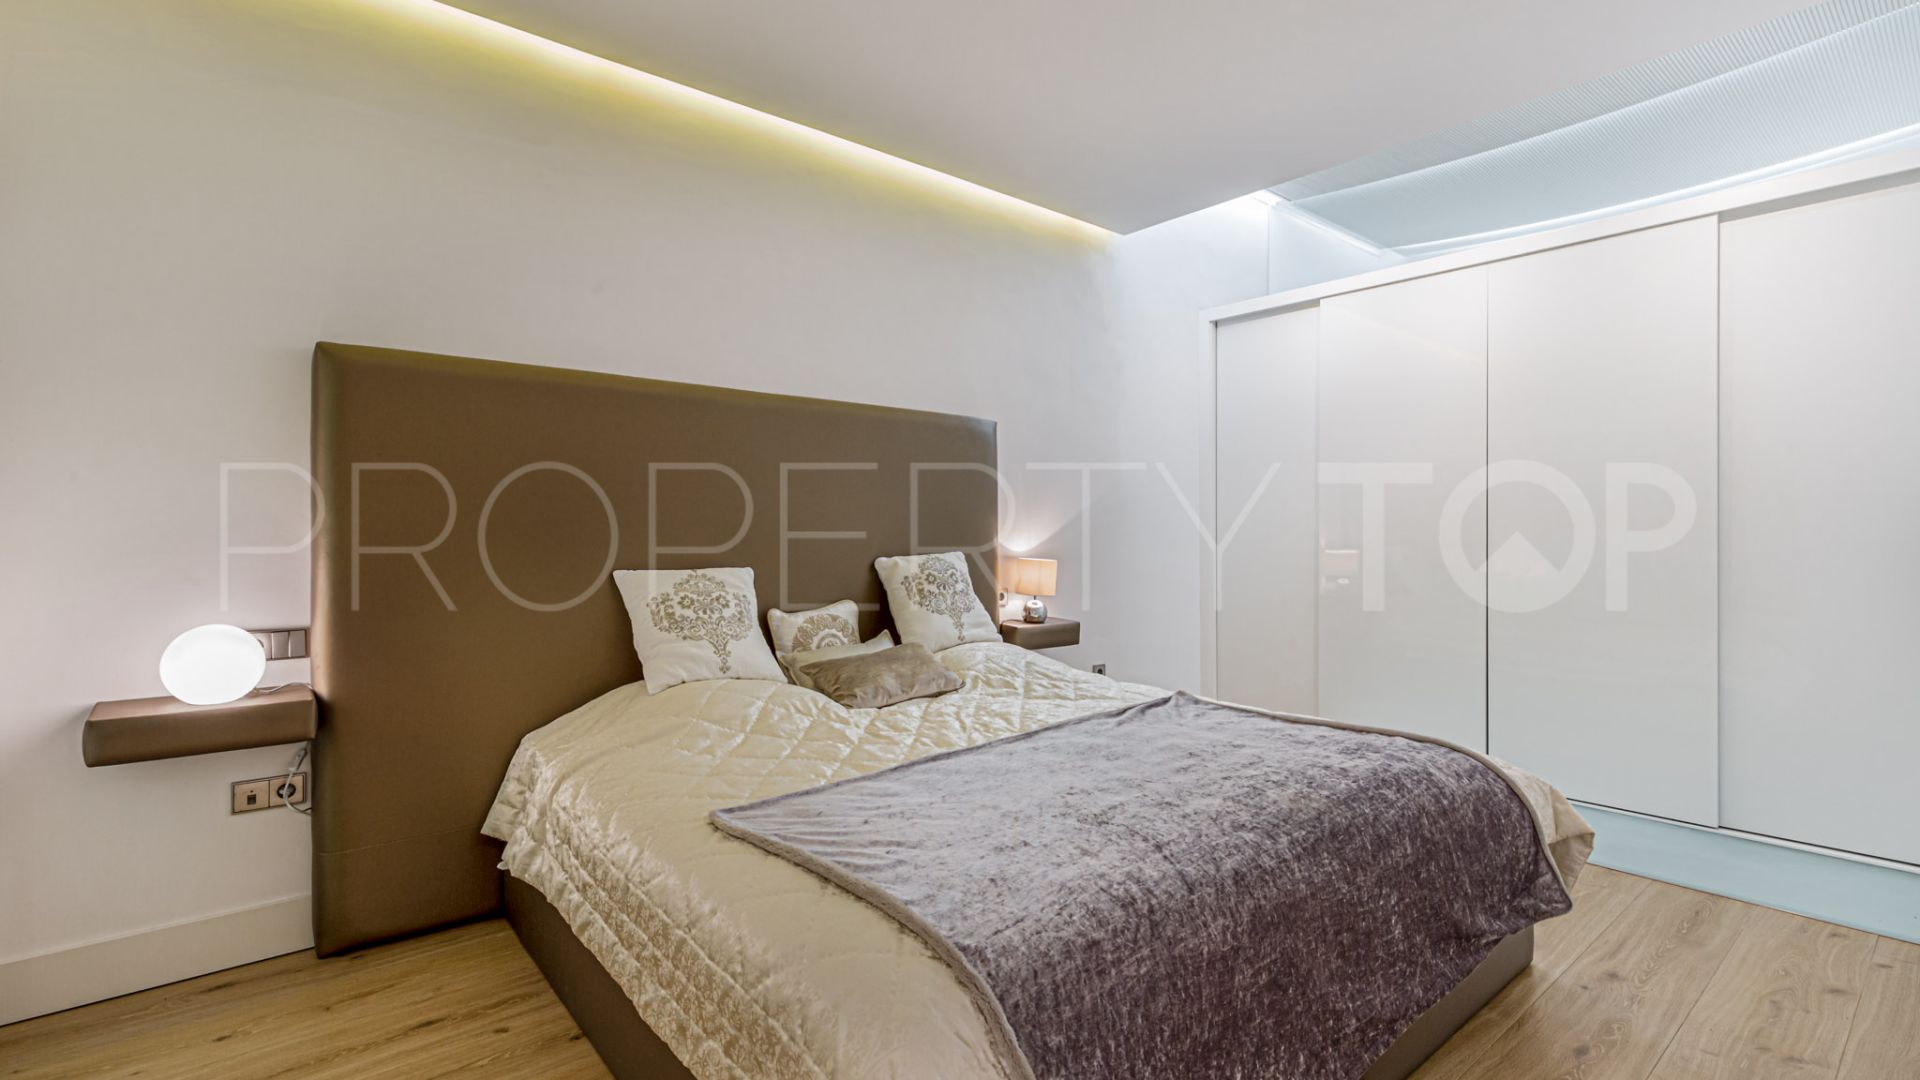 3 bedrooms apartment in Marbella - Puerto Banus for sale